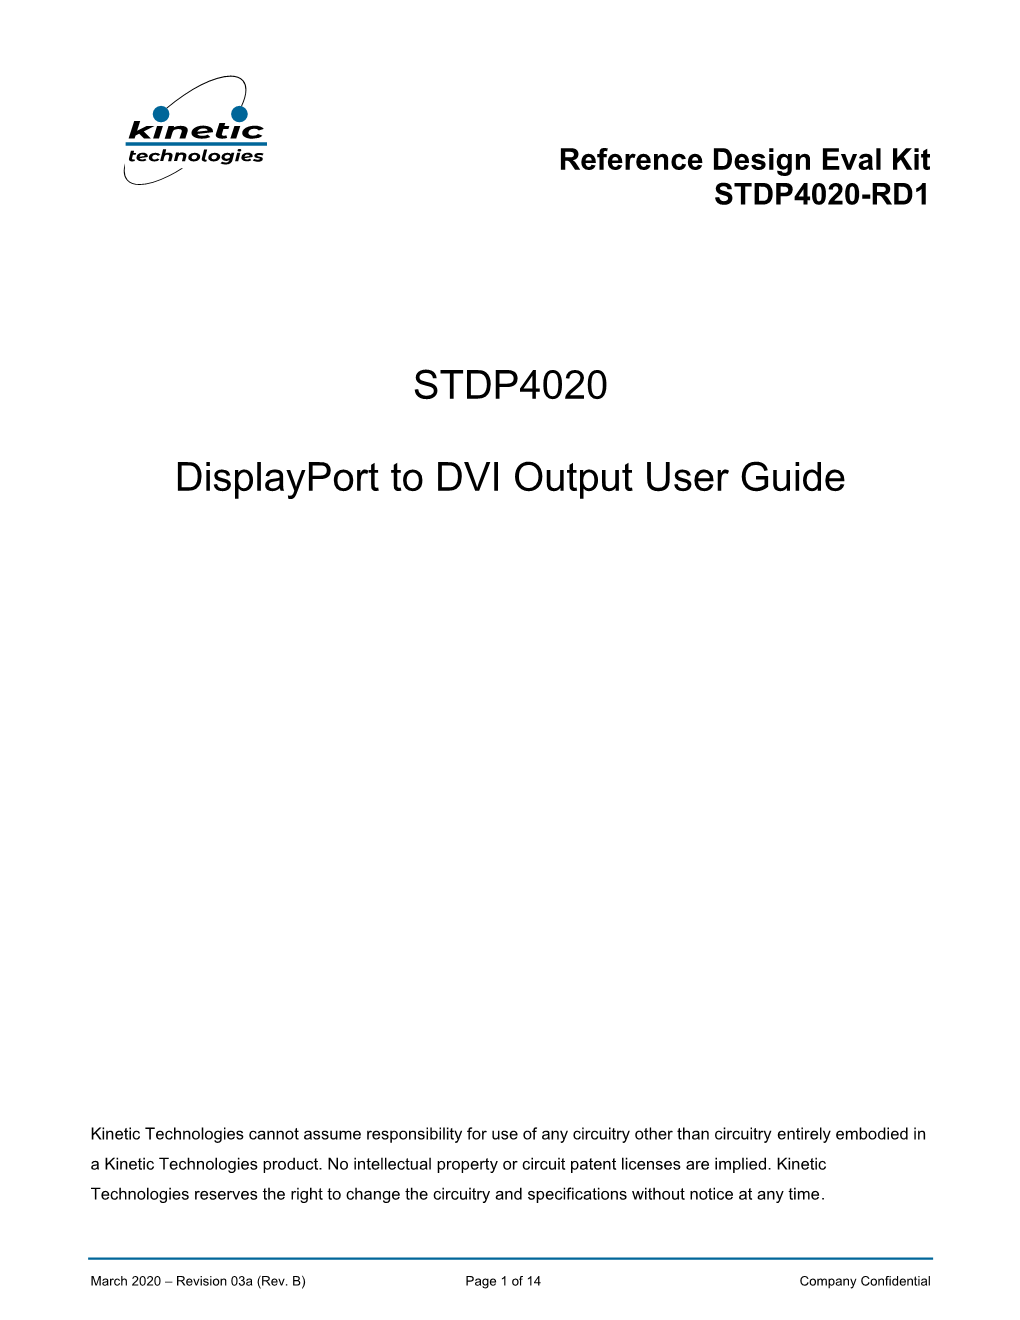 STDP4020 Displayport to DVI Output User Guide